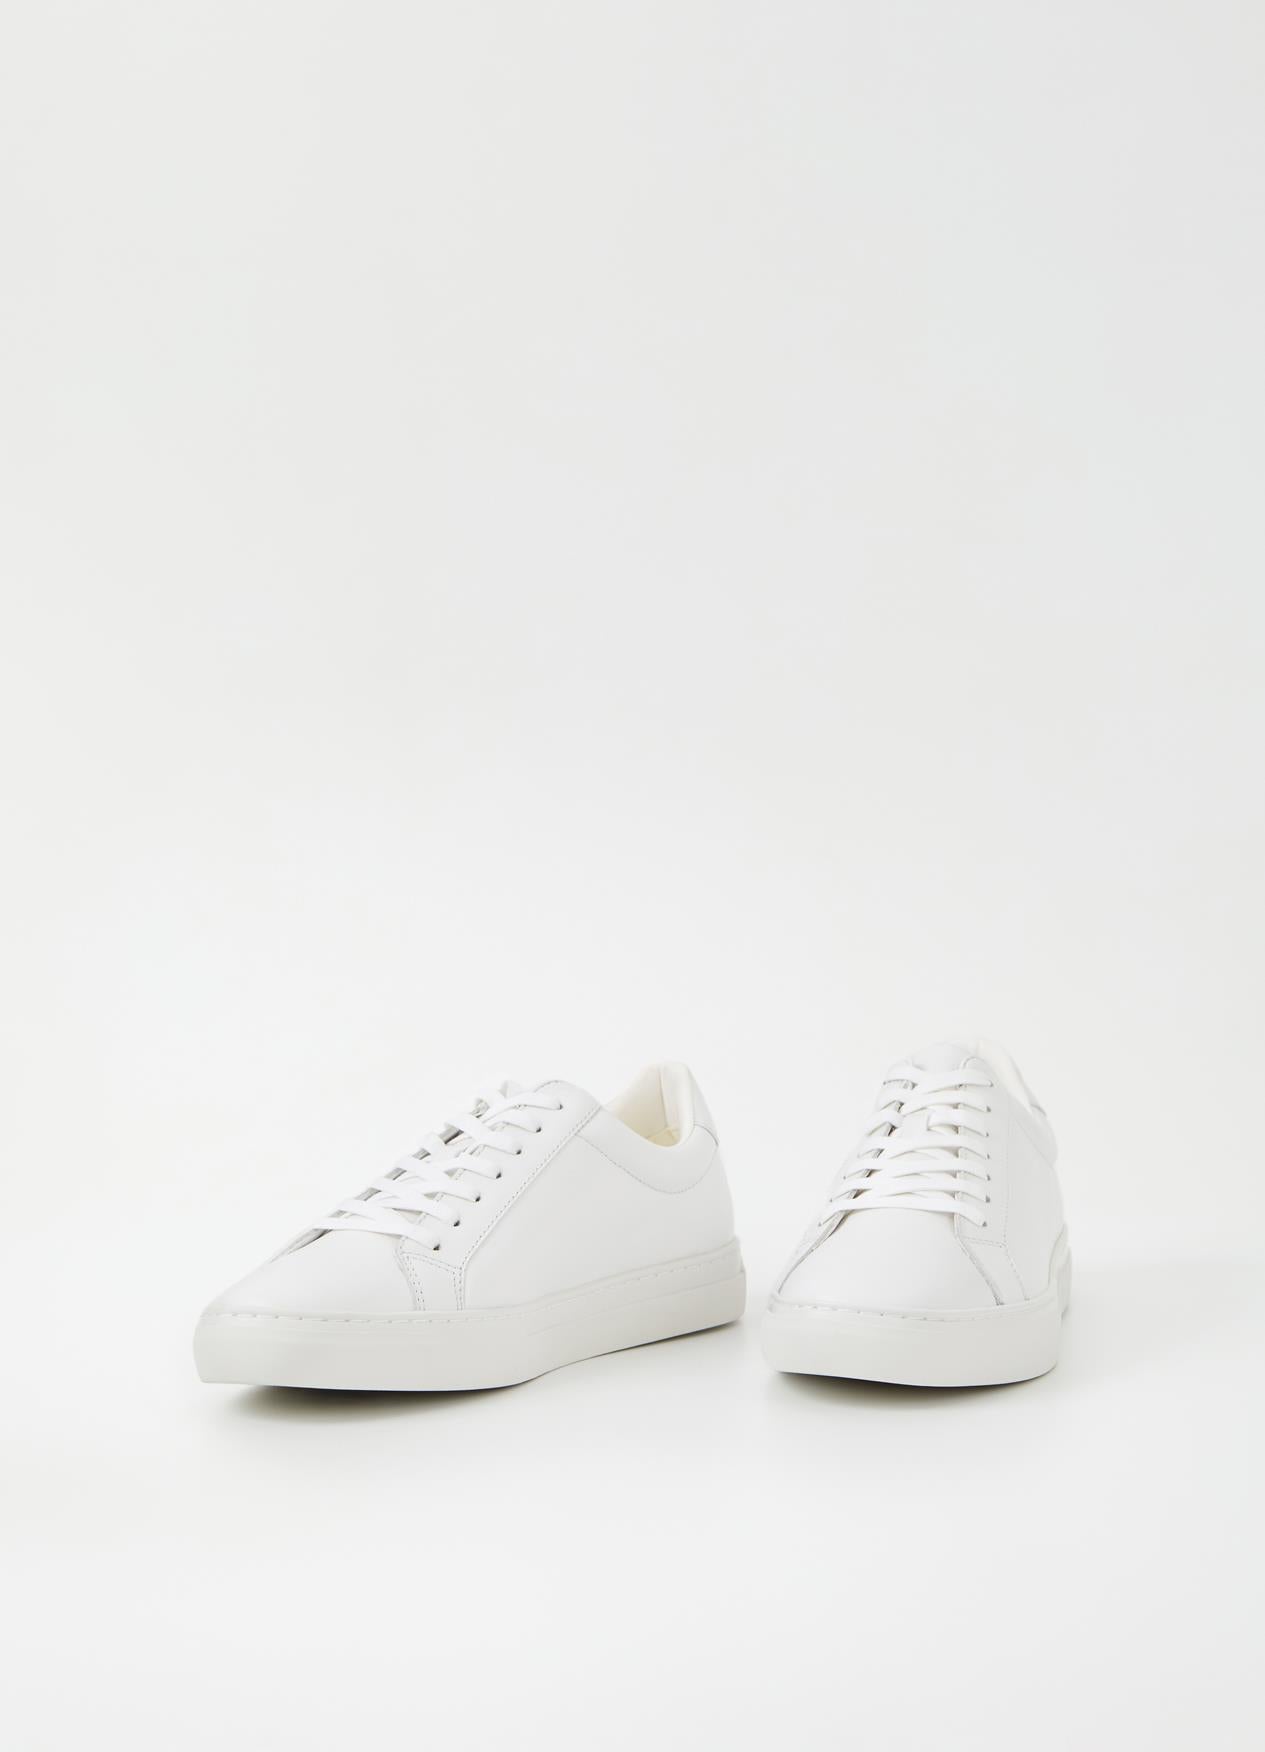 Paul Sneakers - White